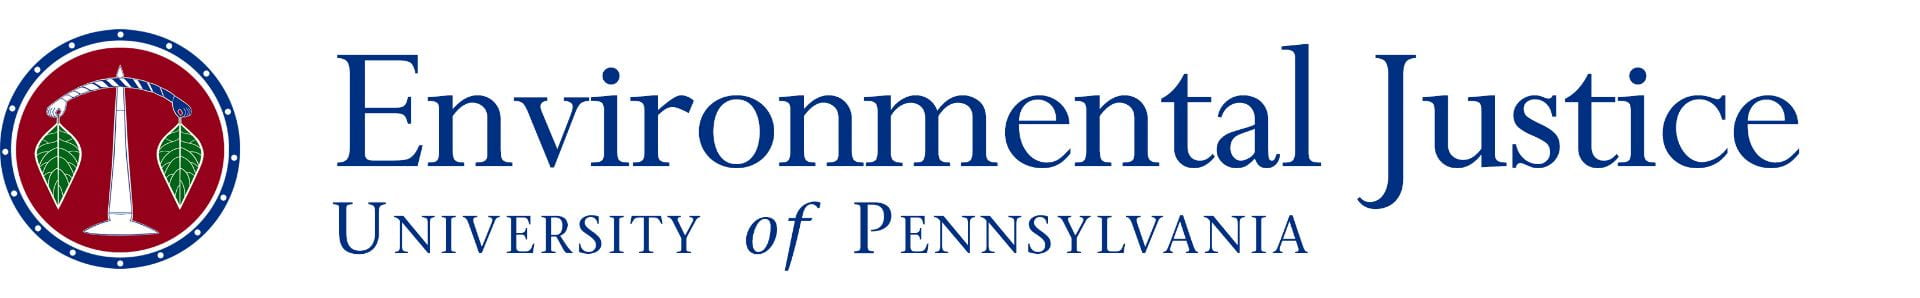 Environmental Justice | University of Pennsylvania